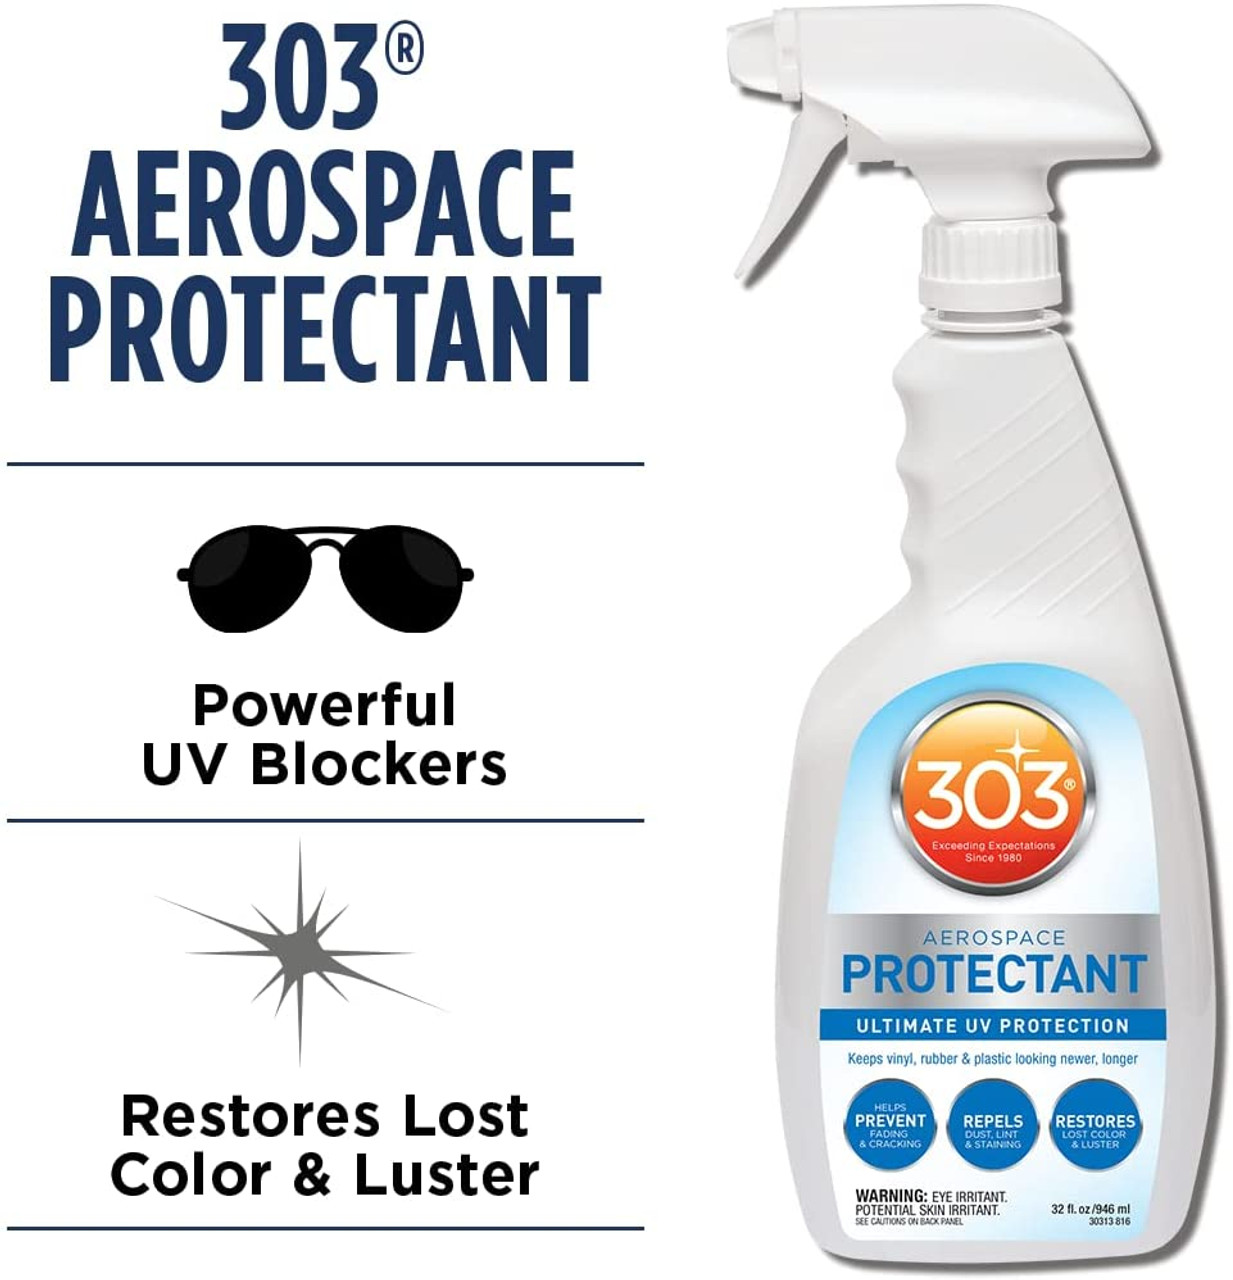 Buy 303 Aerospace Protectant 16 Oz Trigger Sprayer Cleaner